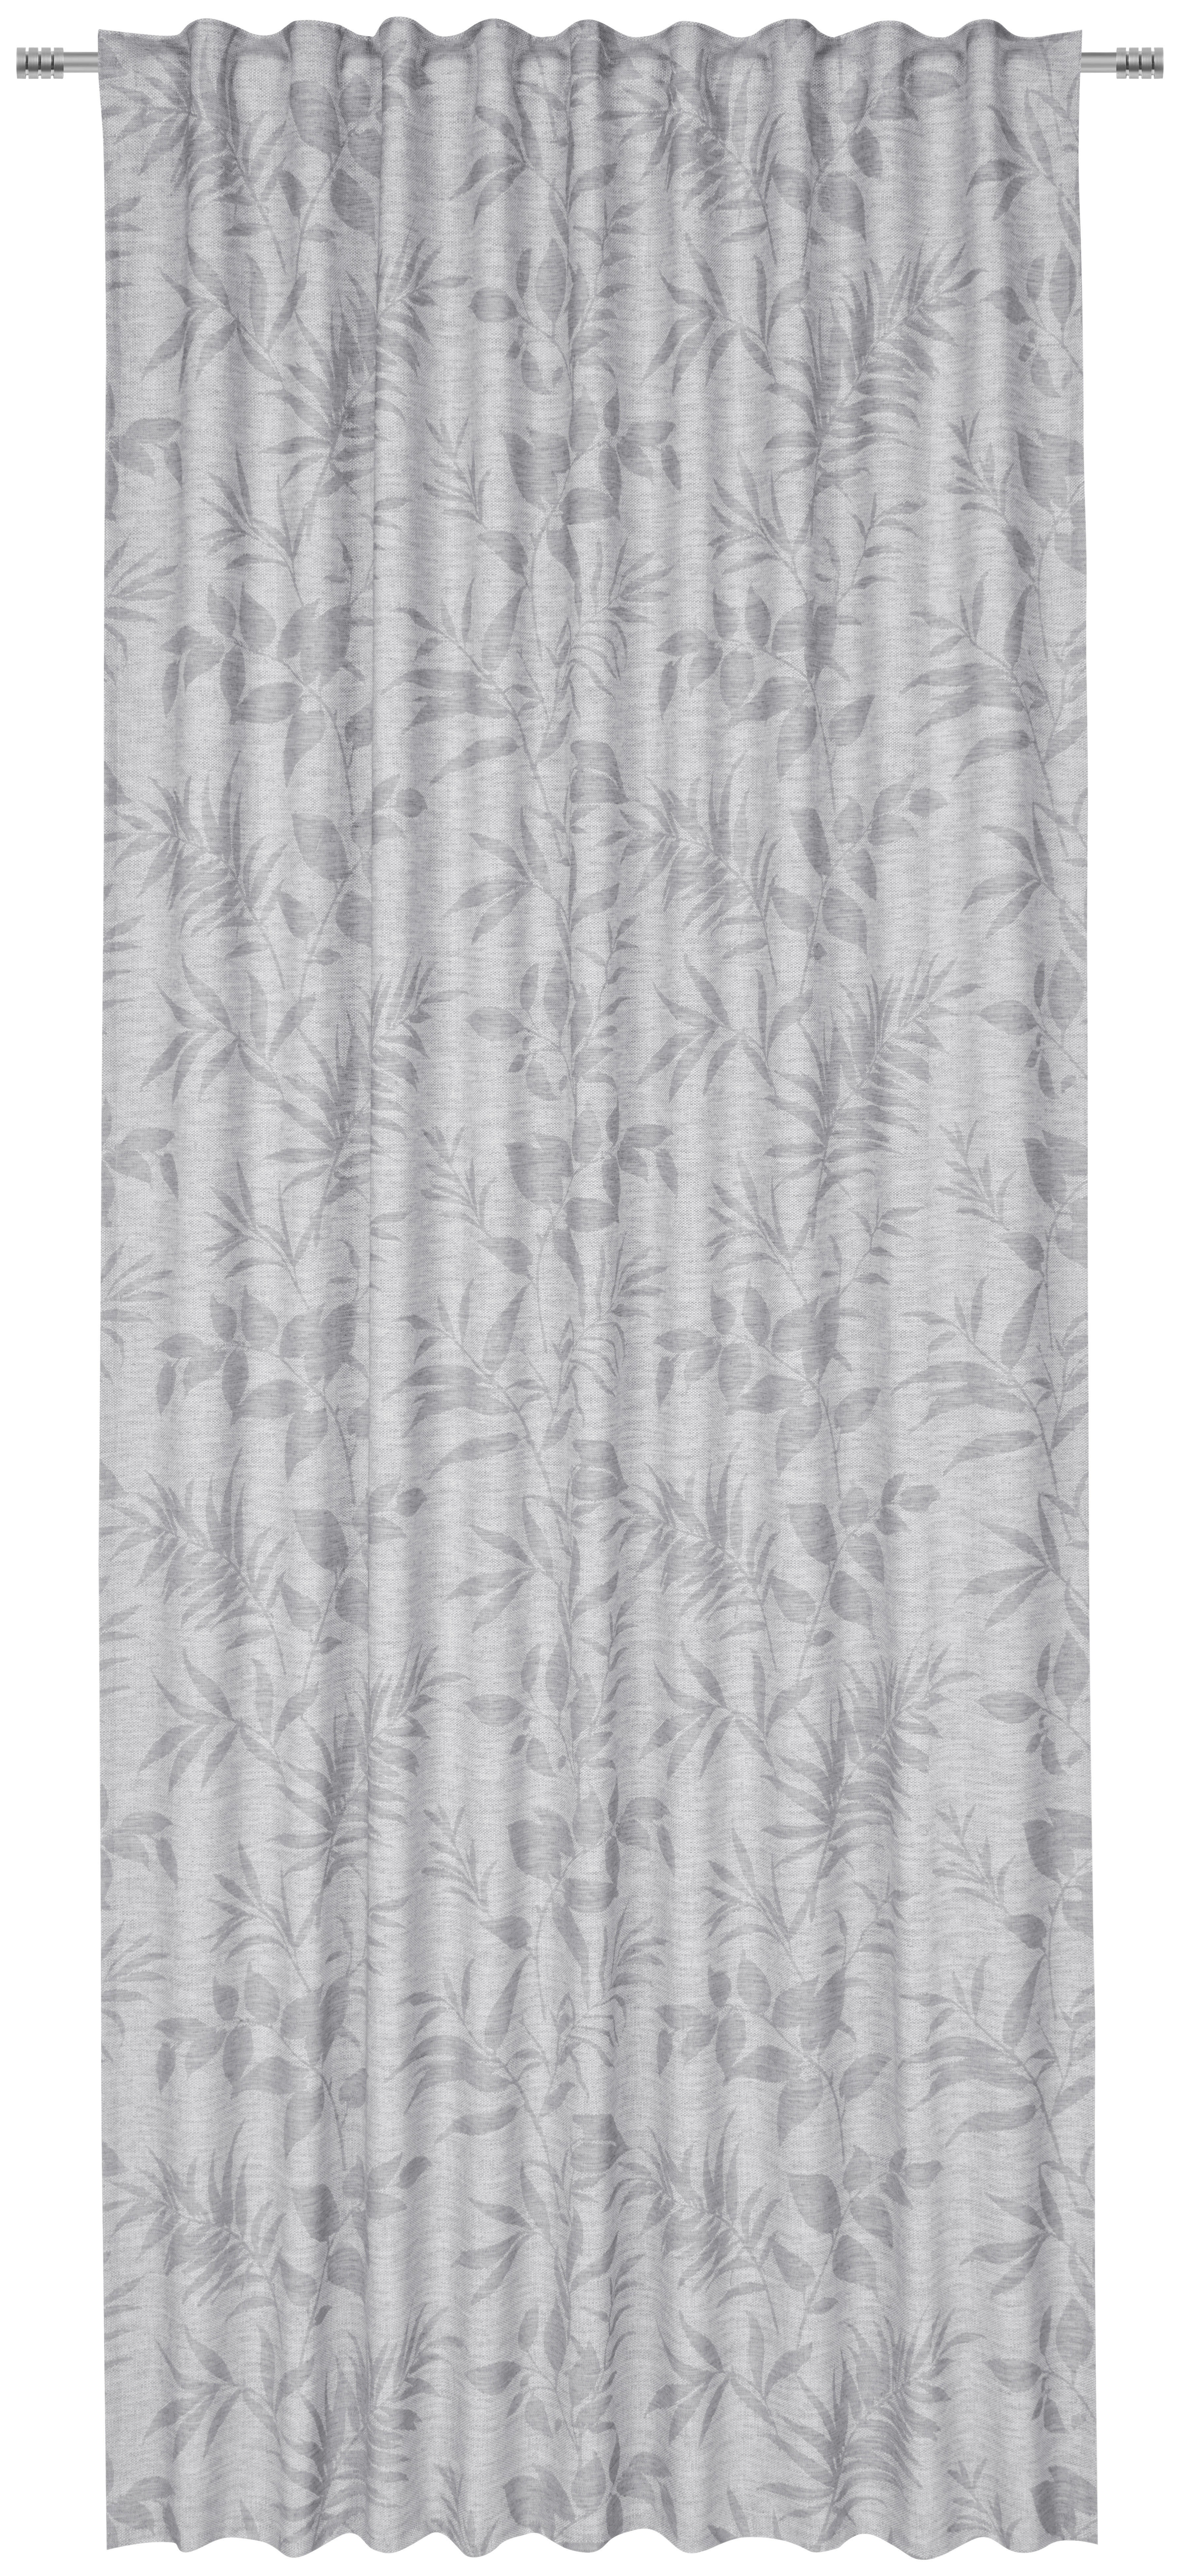 FERTIGVORHANG LA PALMA blickdicht 140/245 cm   - Grau, KONVENTIONELL, Textil (140/245cm) - Esposa